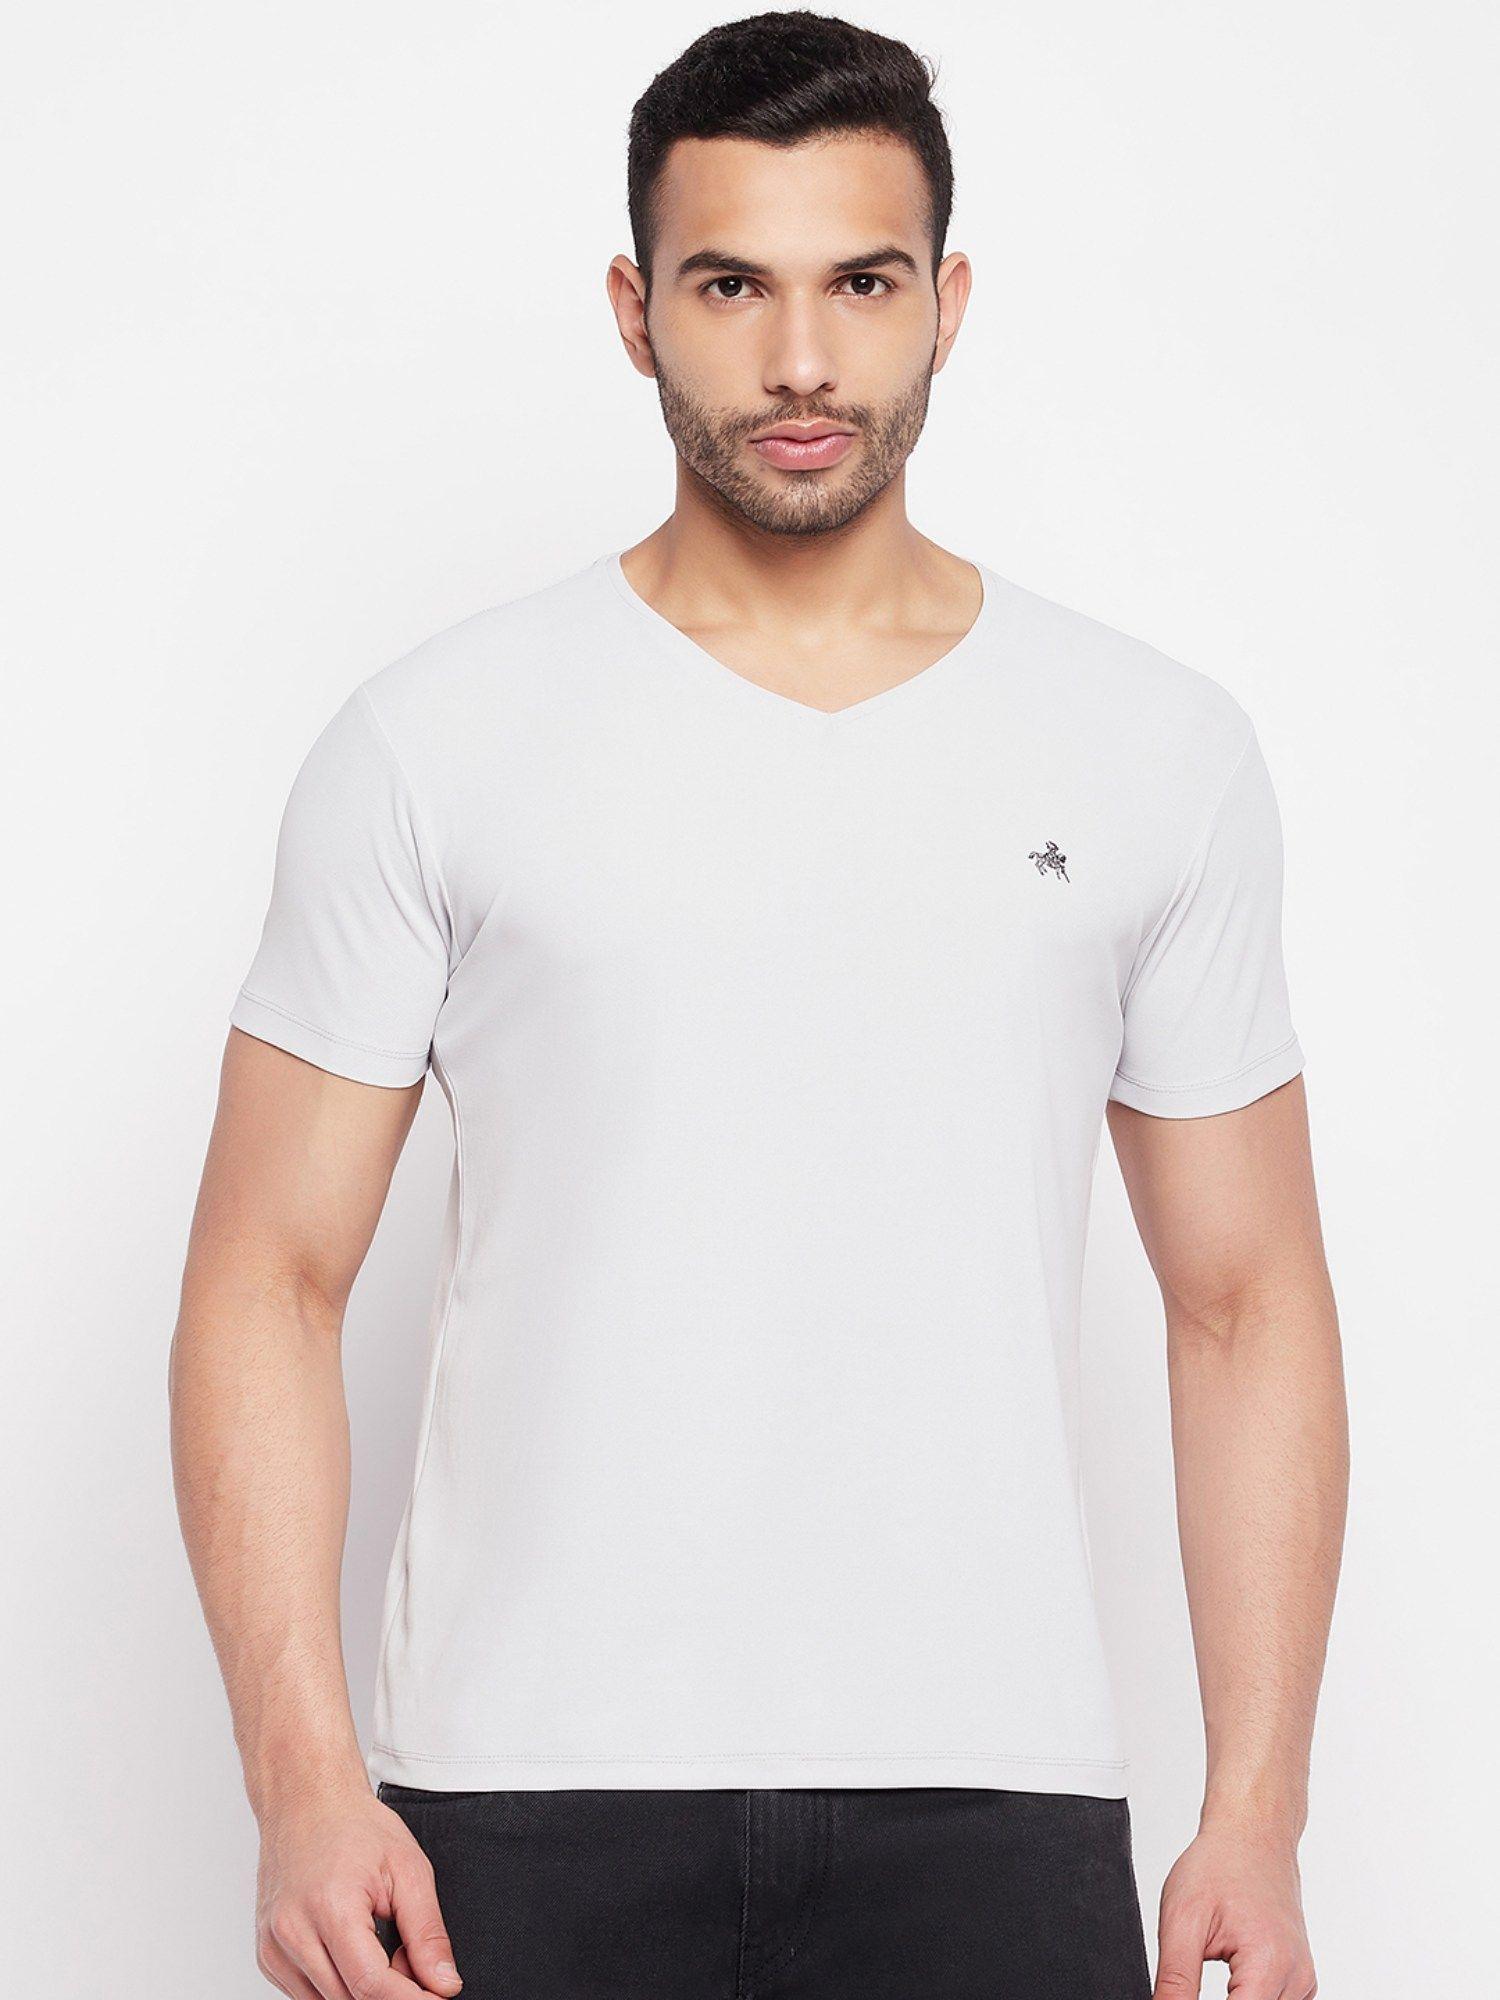 men's light grey printed v-neck t-shirt